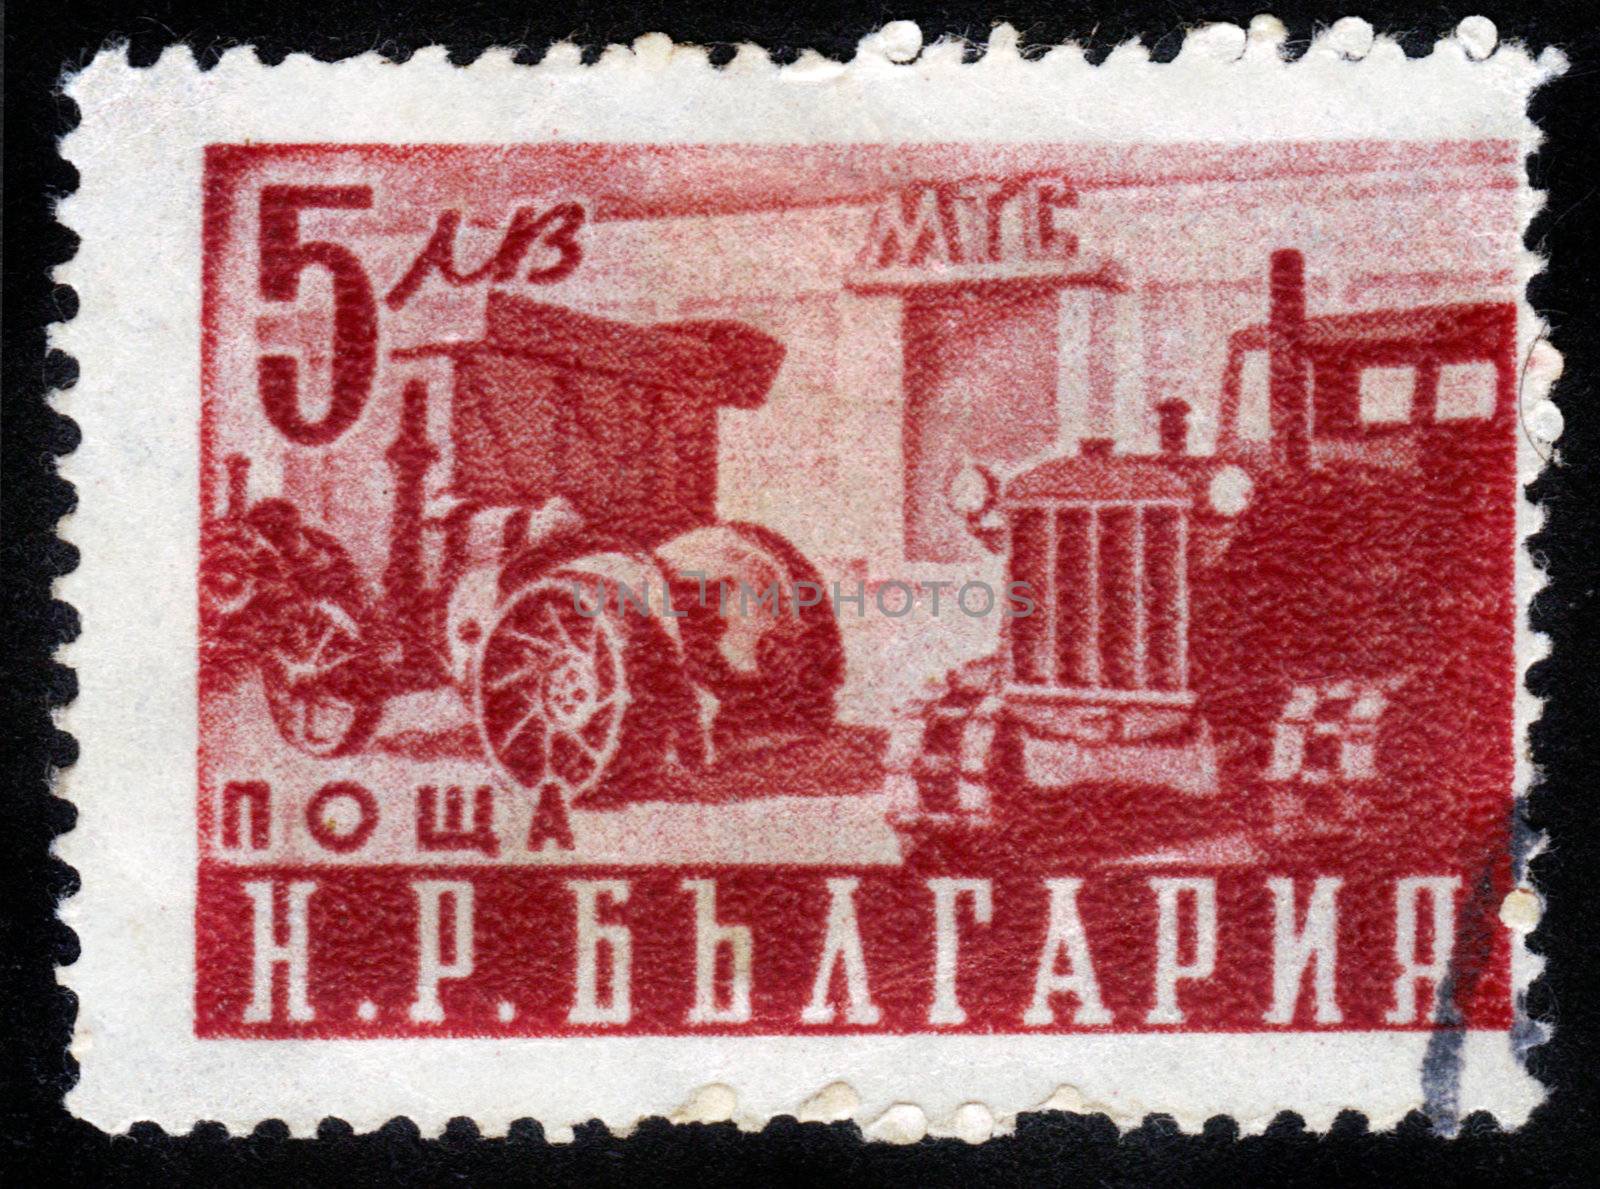 BULGARIA - CIRCA 1951: A stamp printed in Bulgaria shows first bulgarian tractor, circa 1951